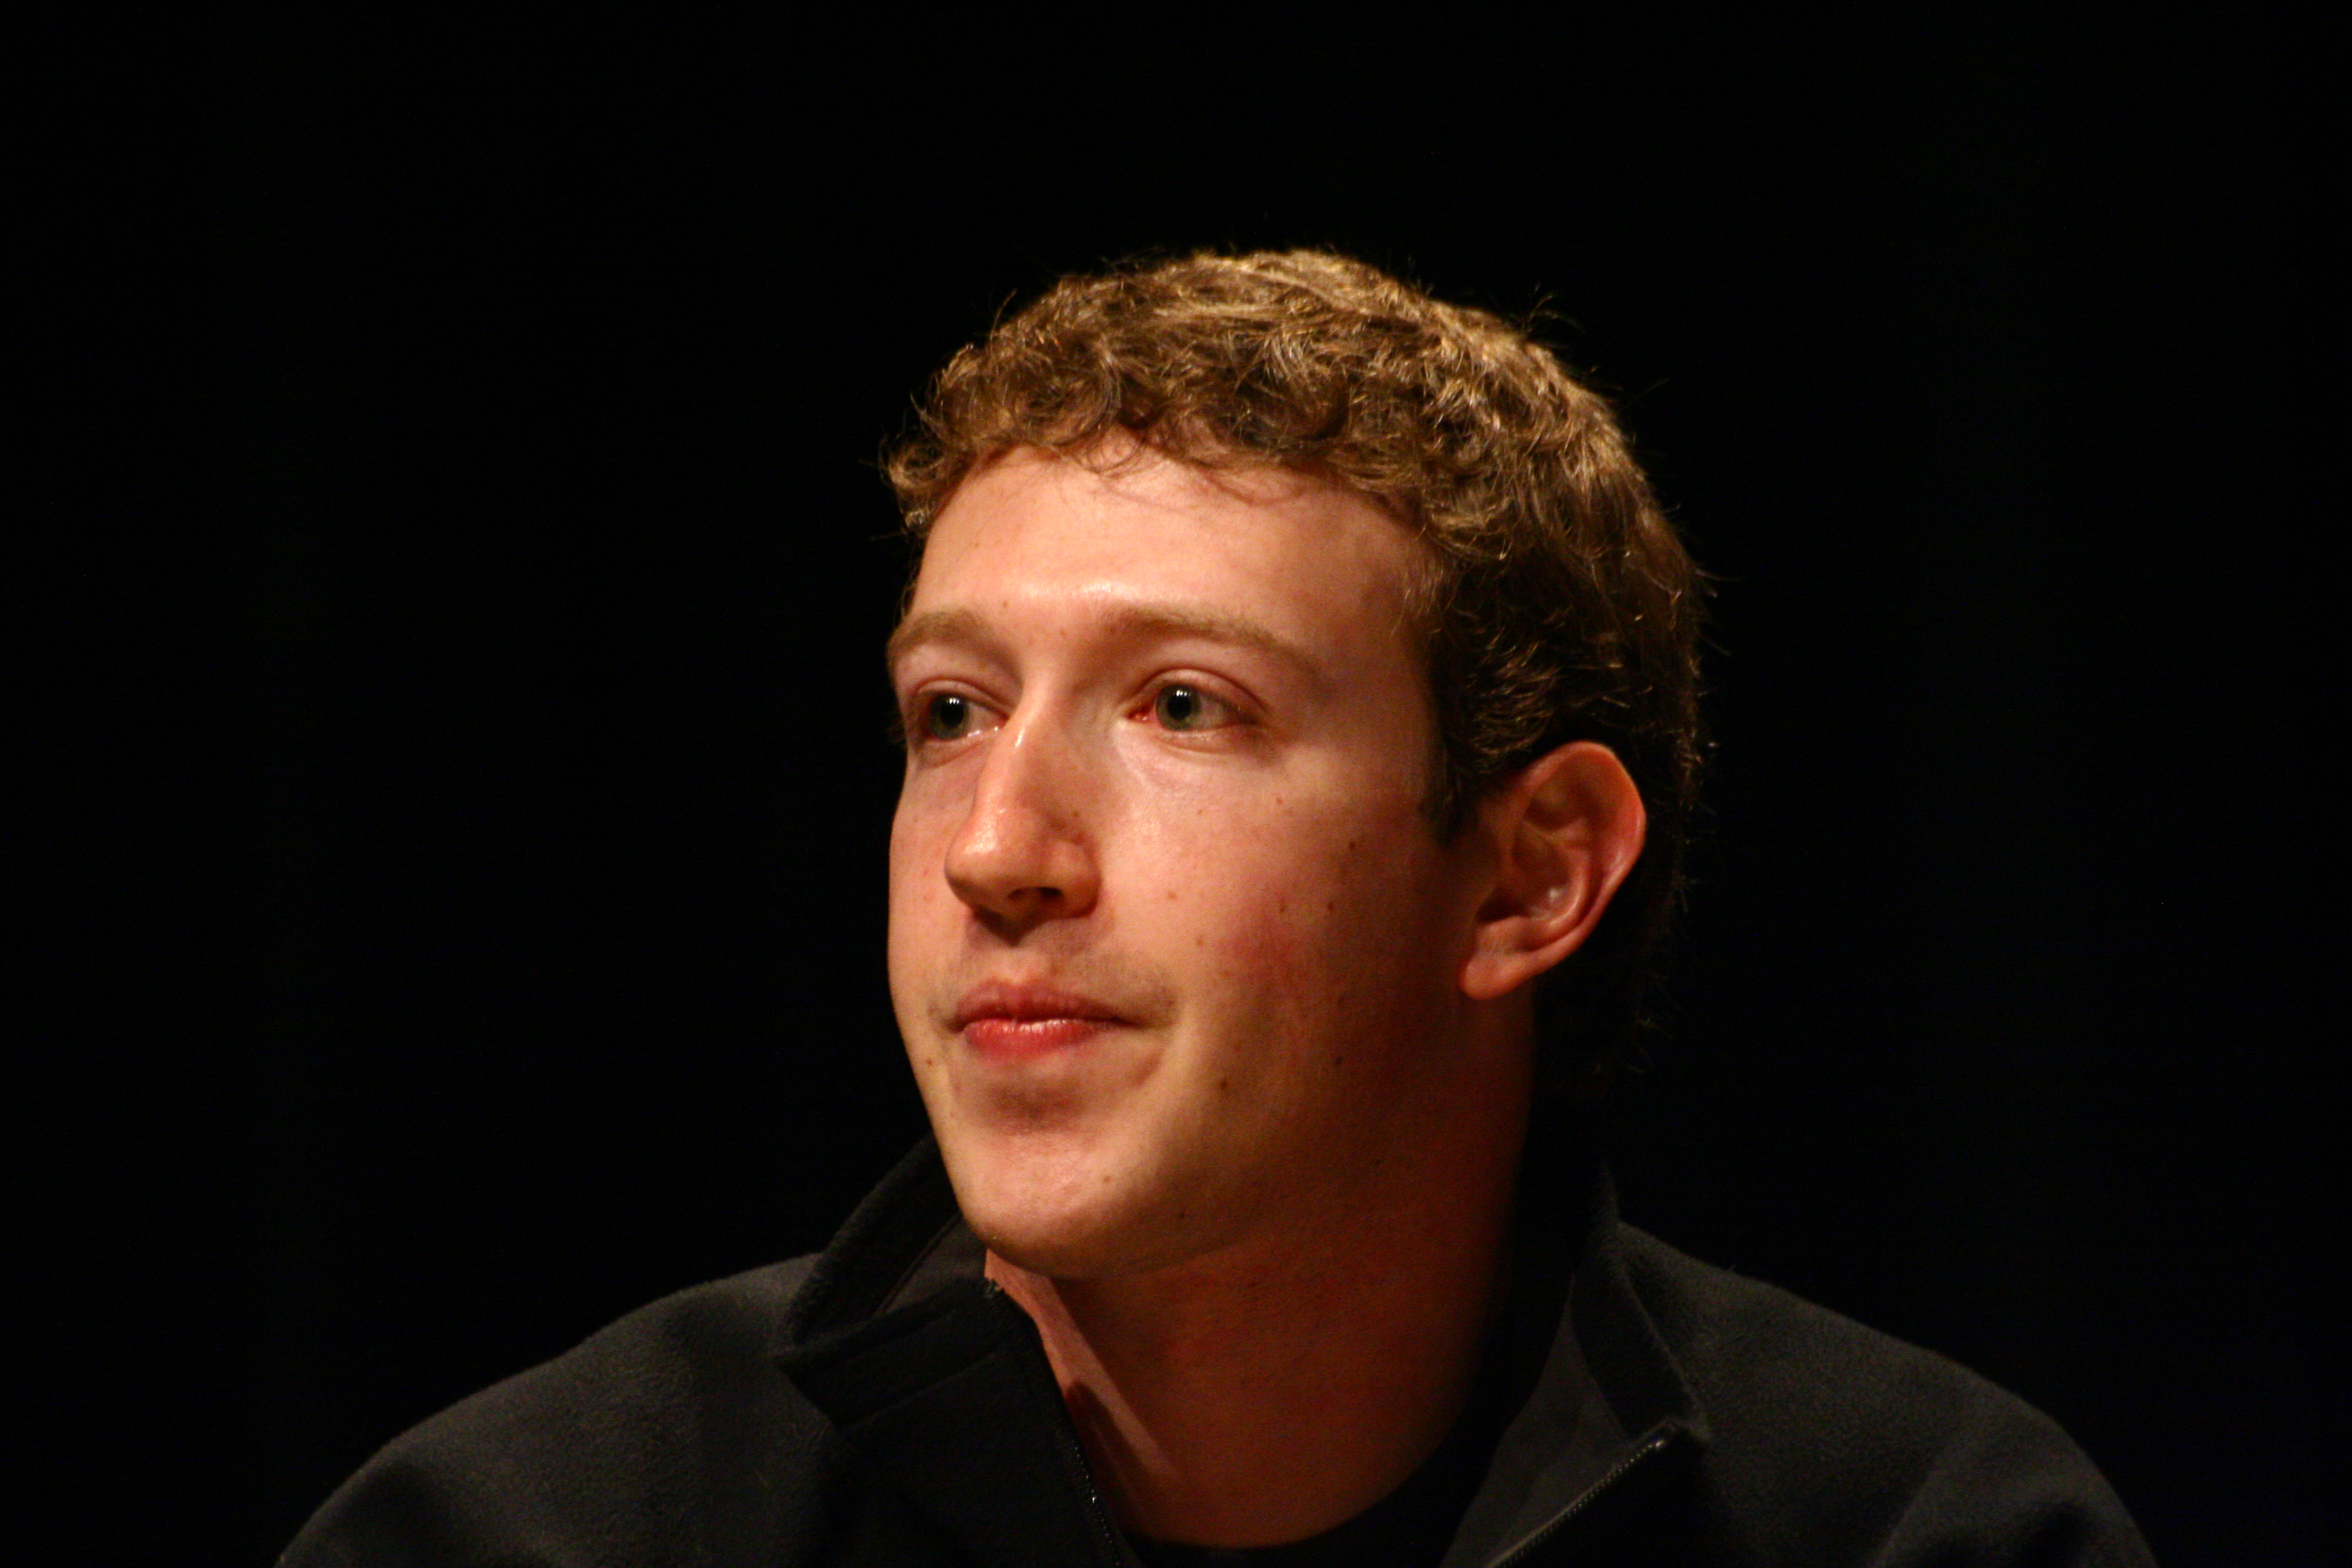 Zuckerberg afirmó que en Facebook se publicado contenido engañoso